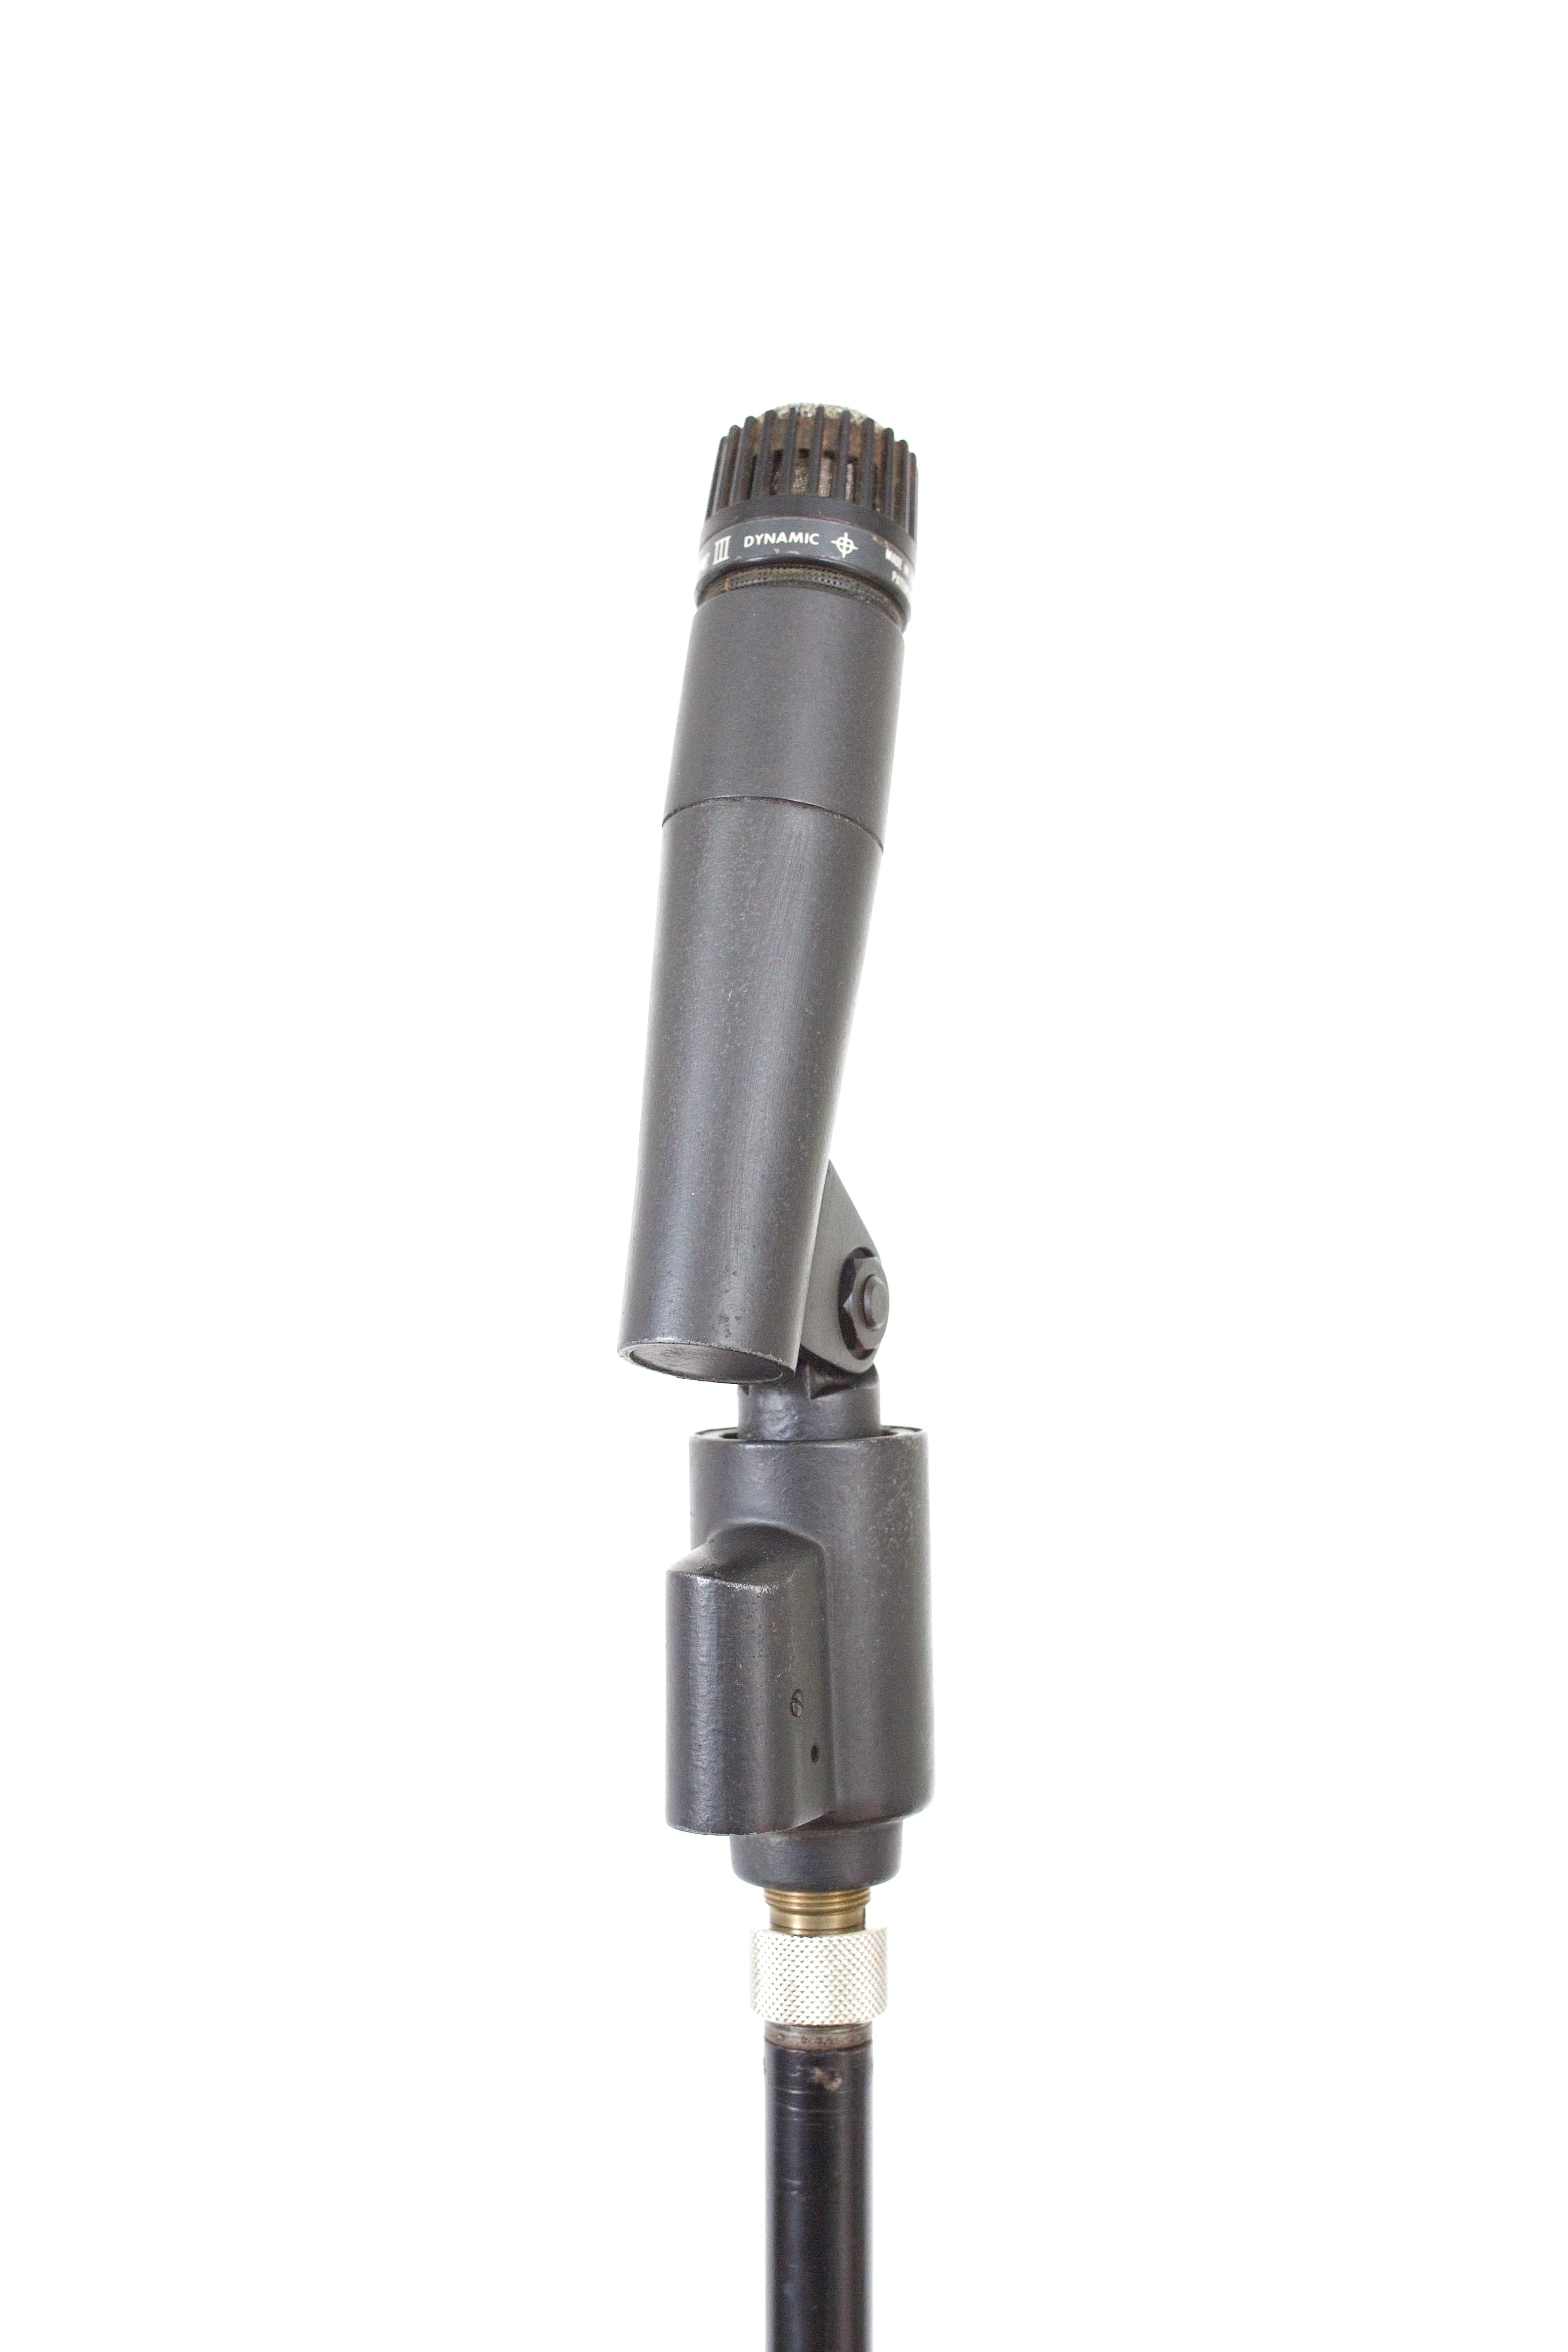 Shure SM56 Unidyne III Dynamic Microphone